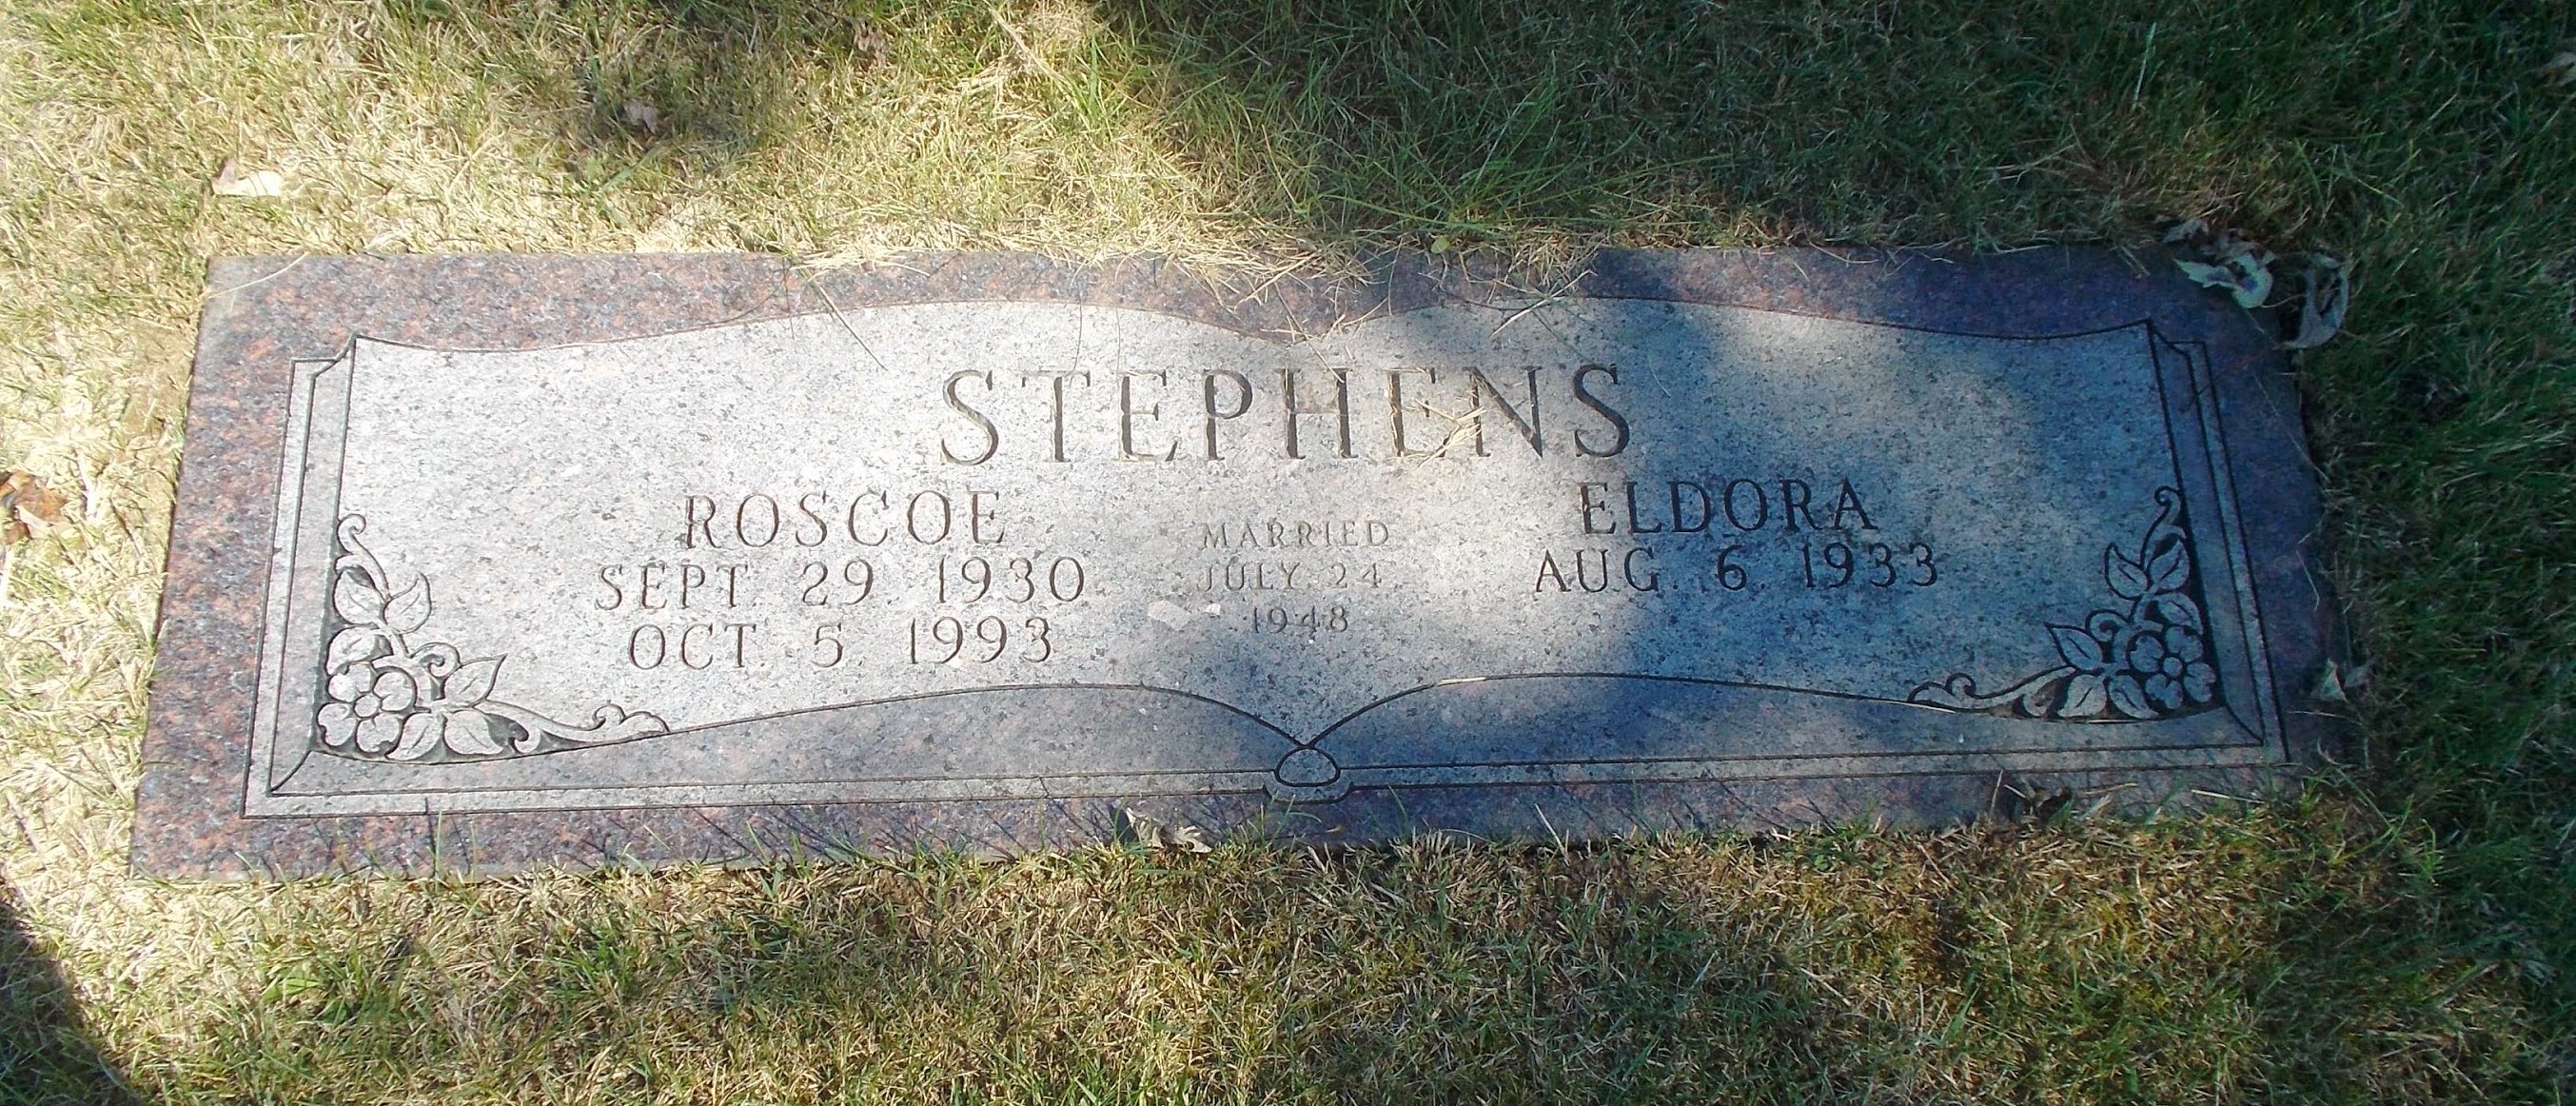 Roscoe Stephens